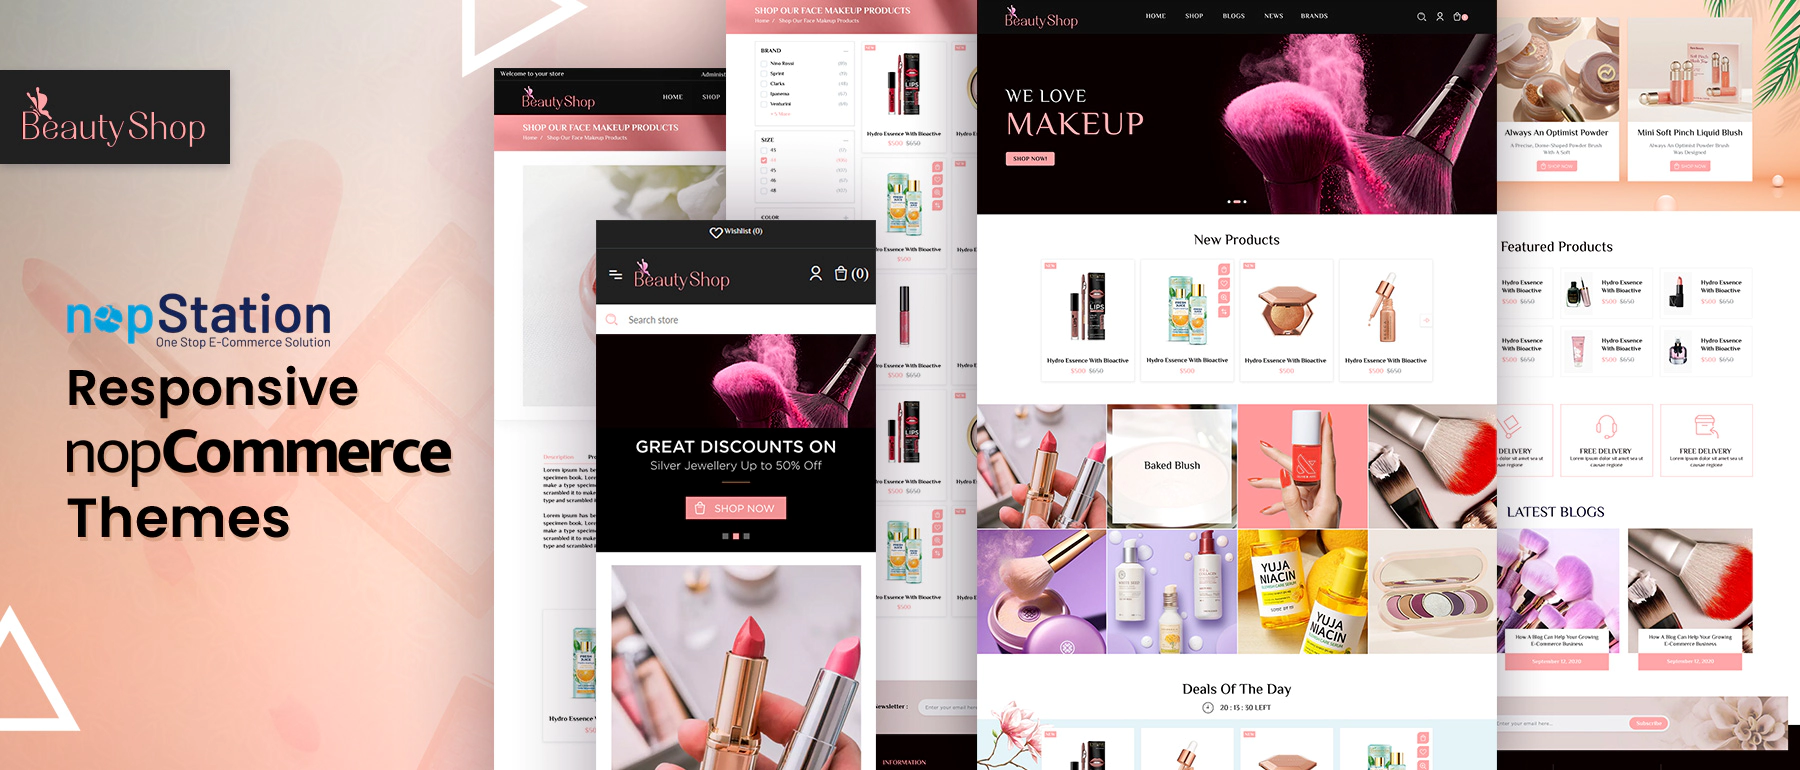 beautyShop theme homepage view